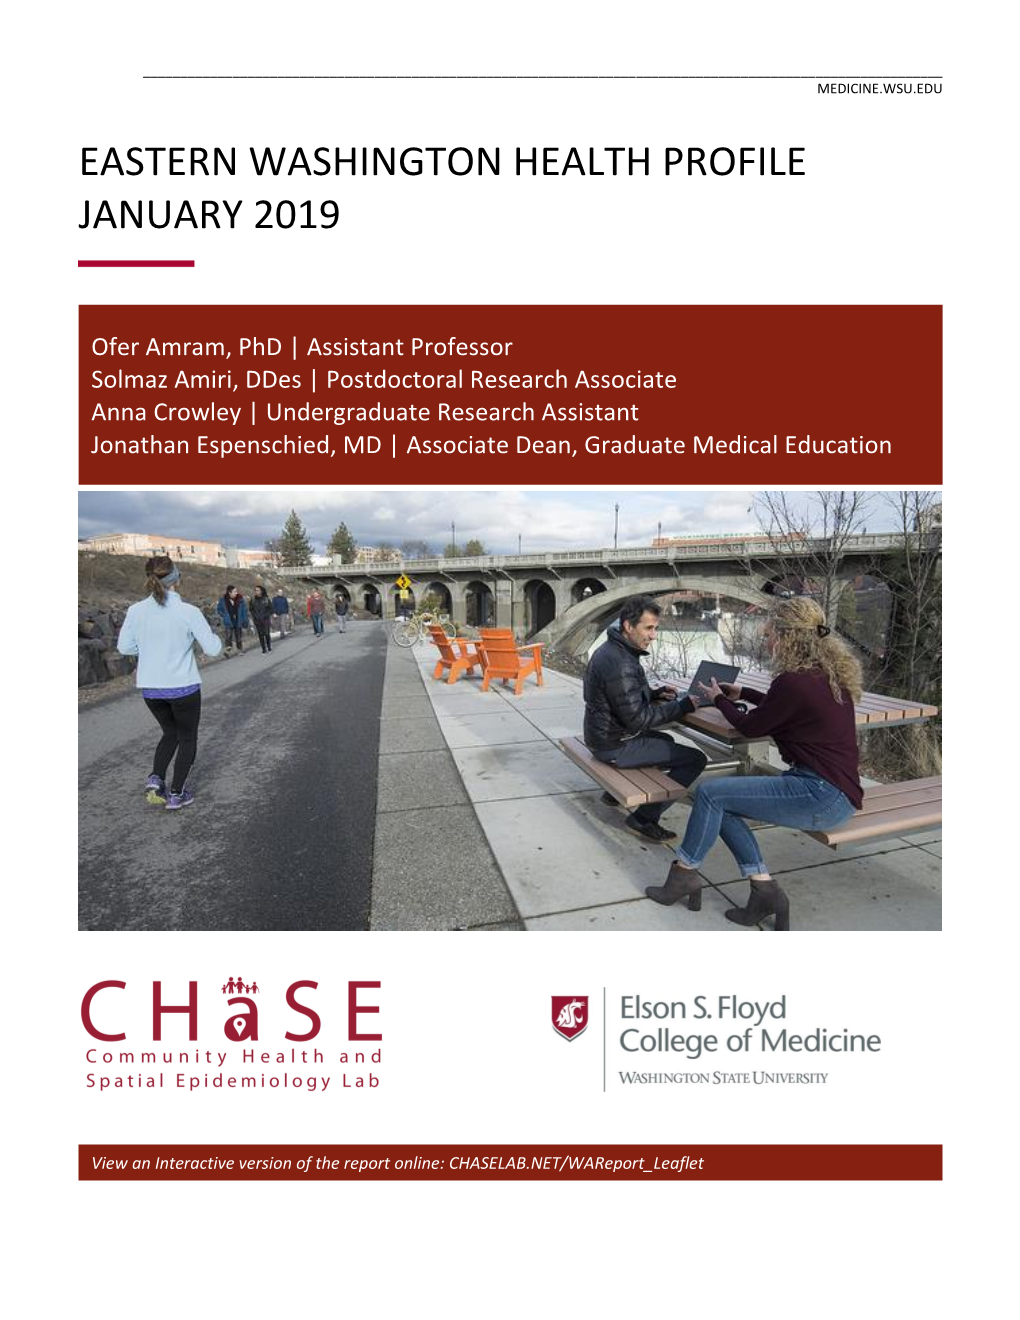 Eastern Washington Health Profile January 2019